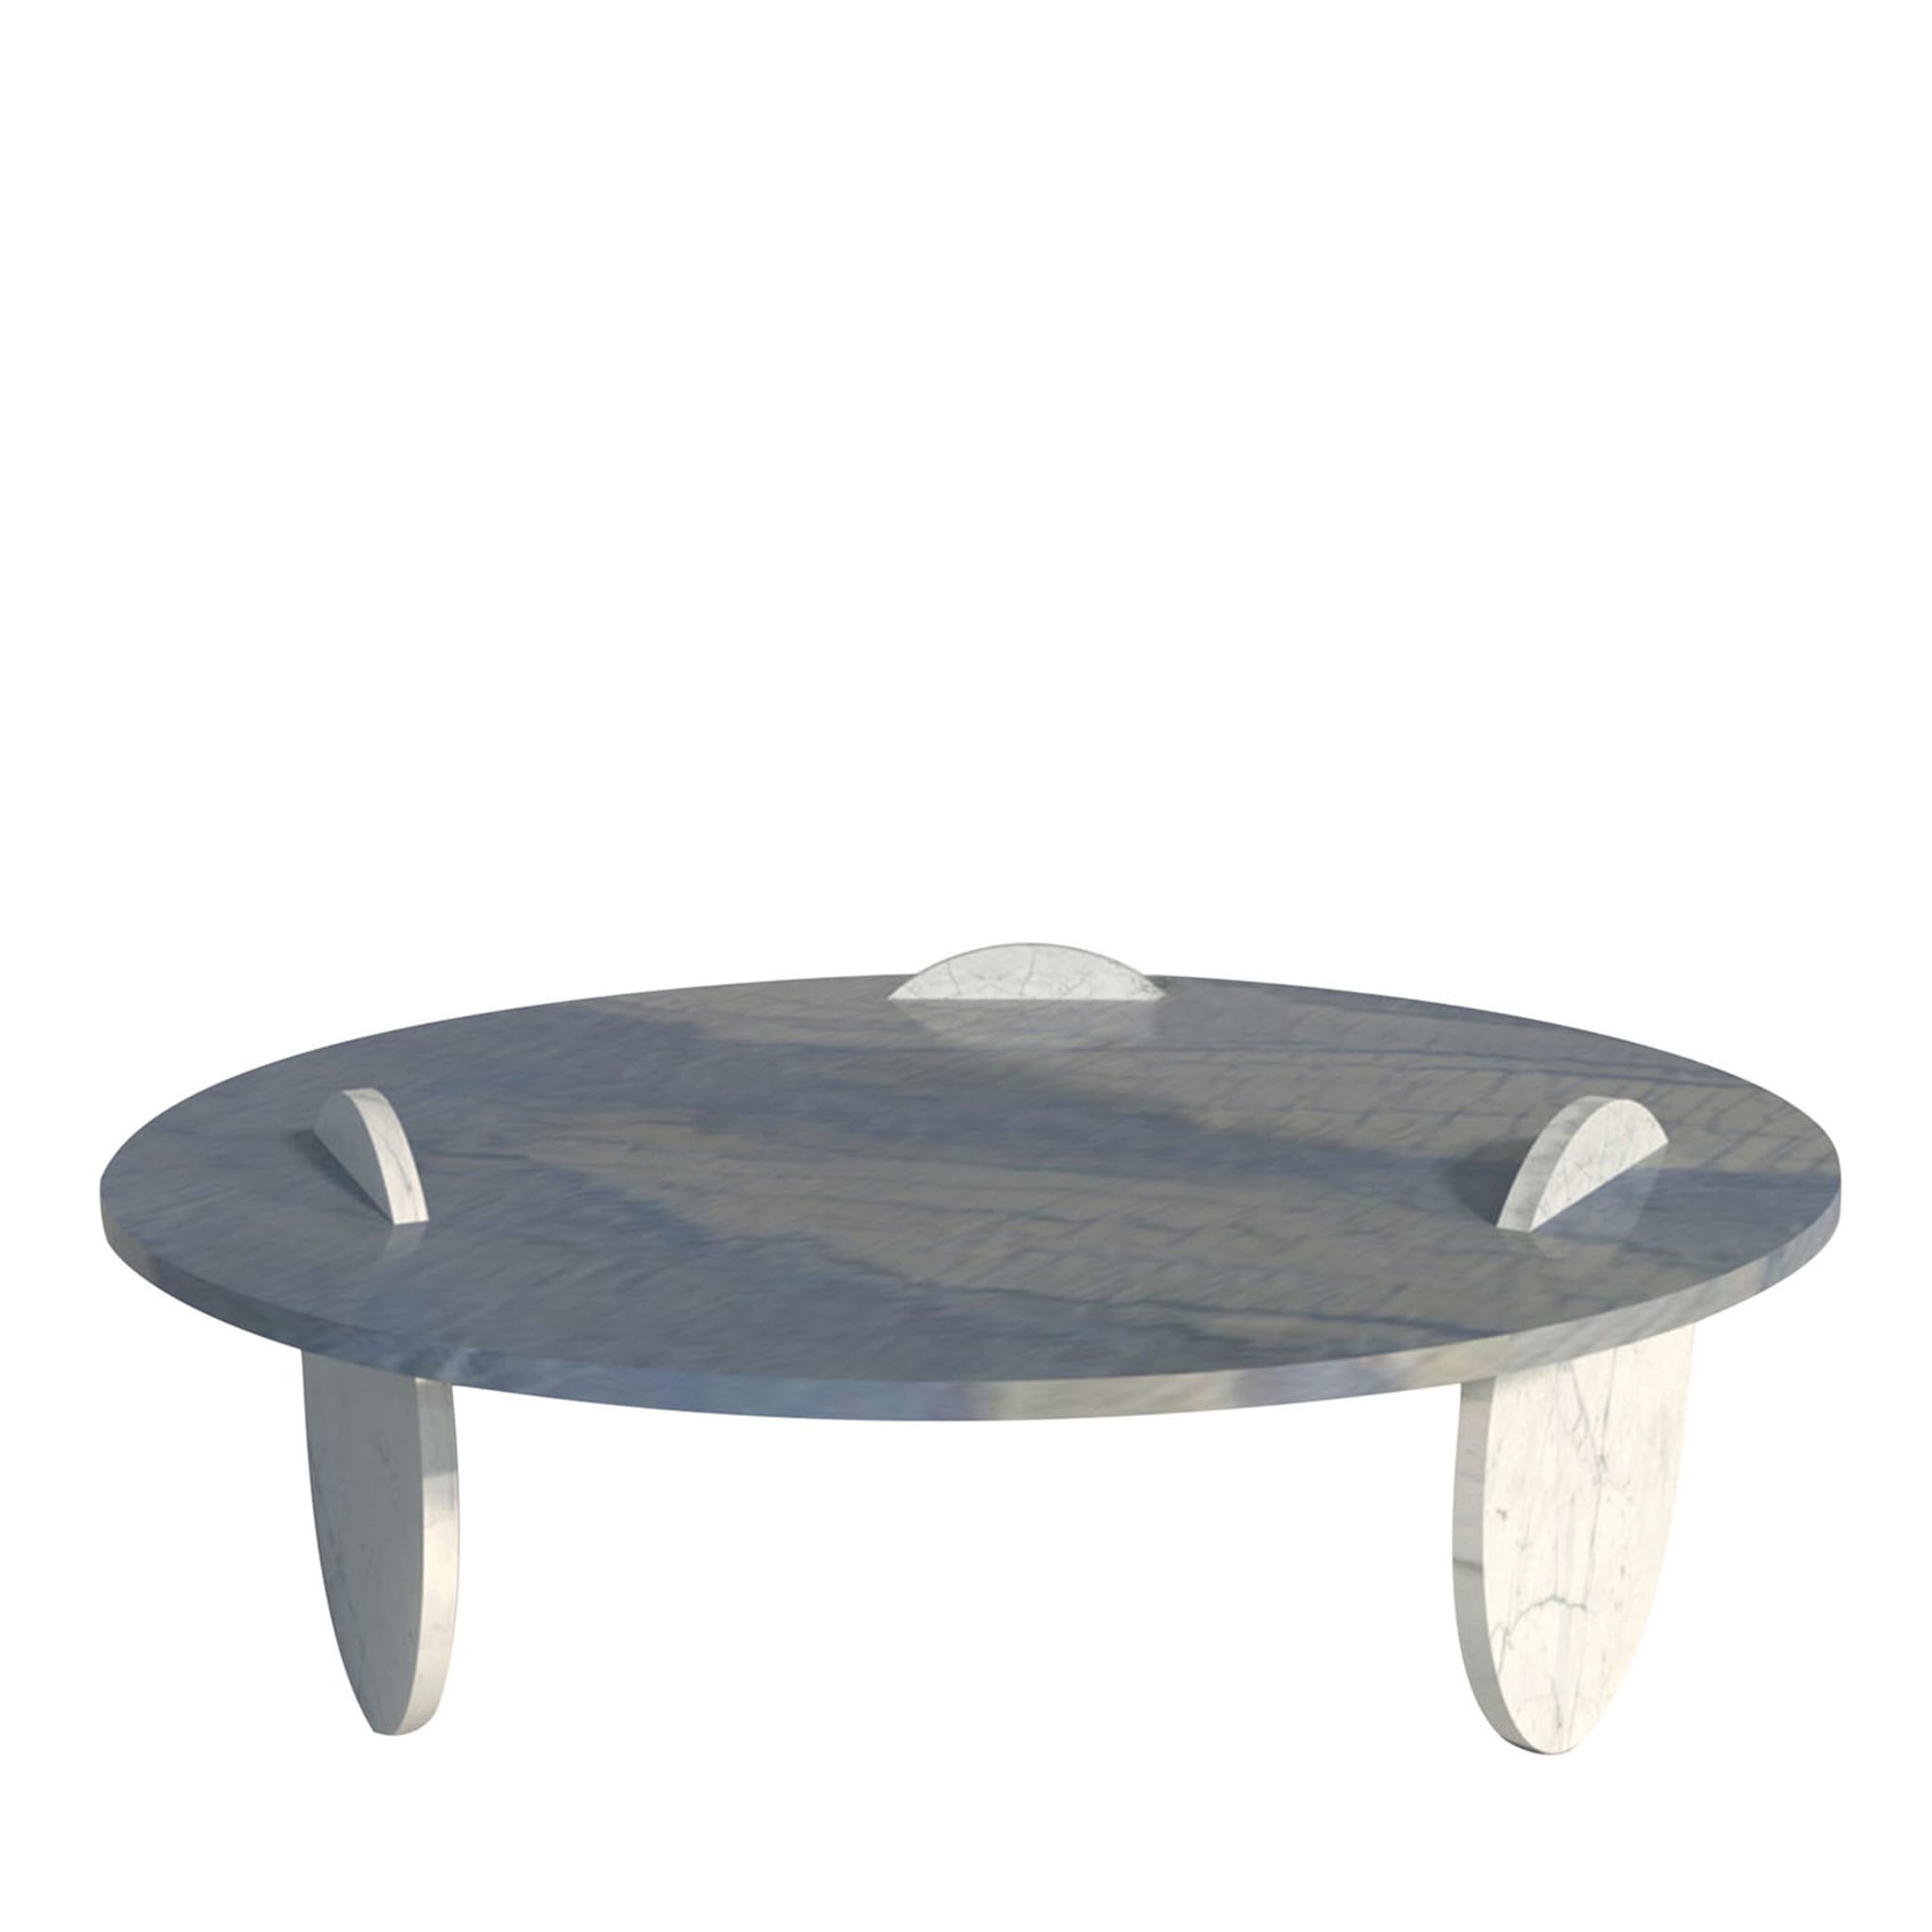 Table basse en marbre bleu et blanc Circus par DebonaDemeo - Vue principale